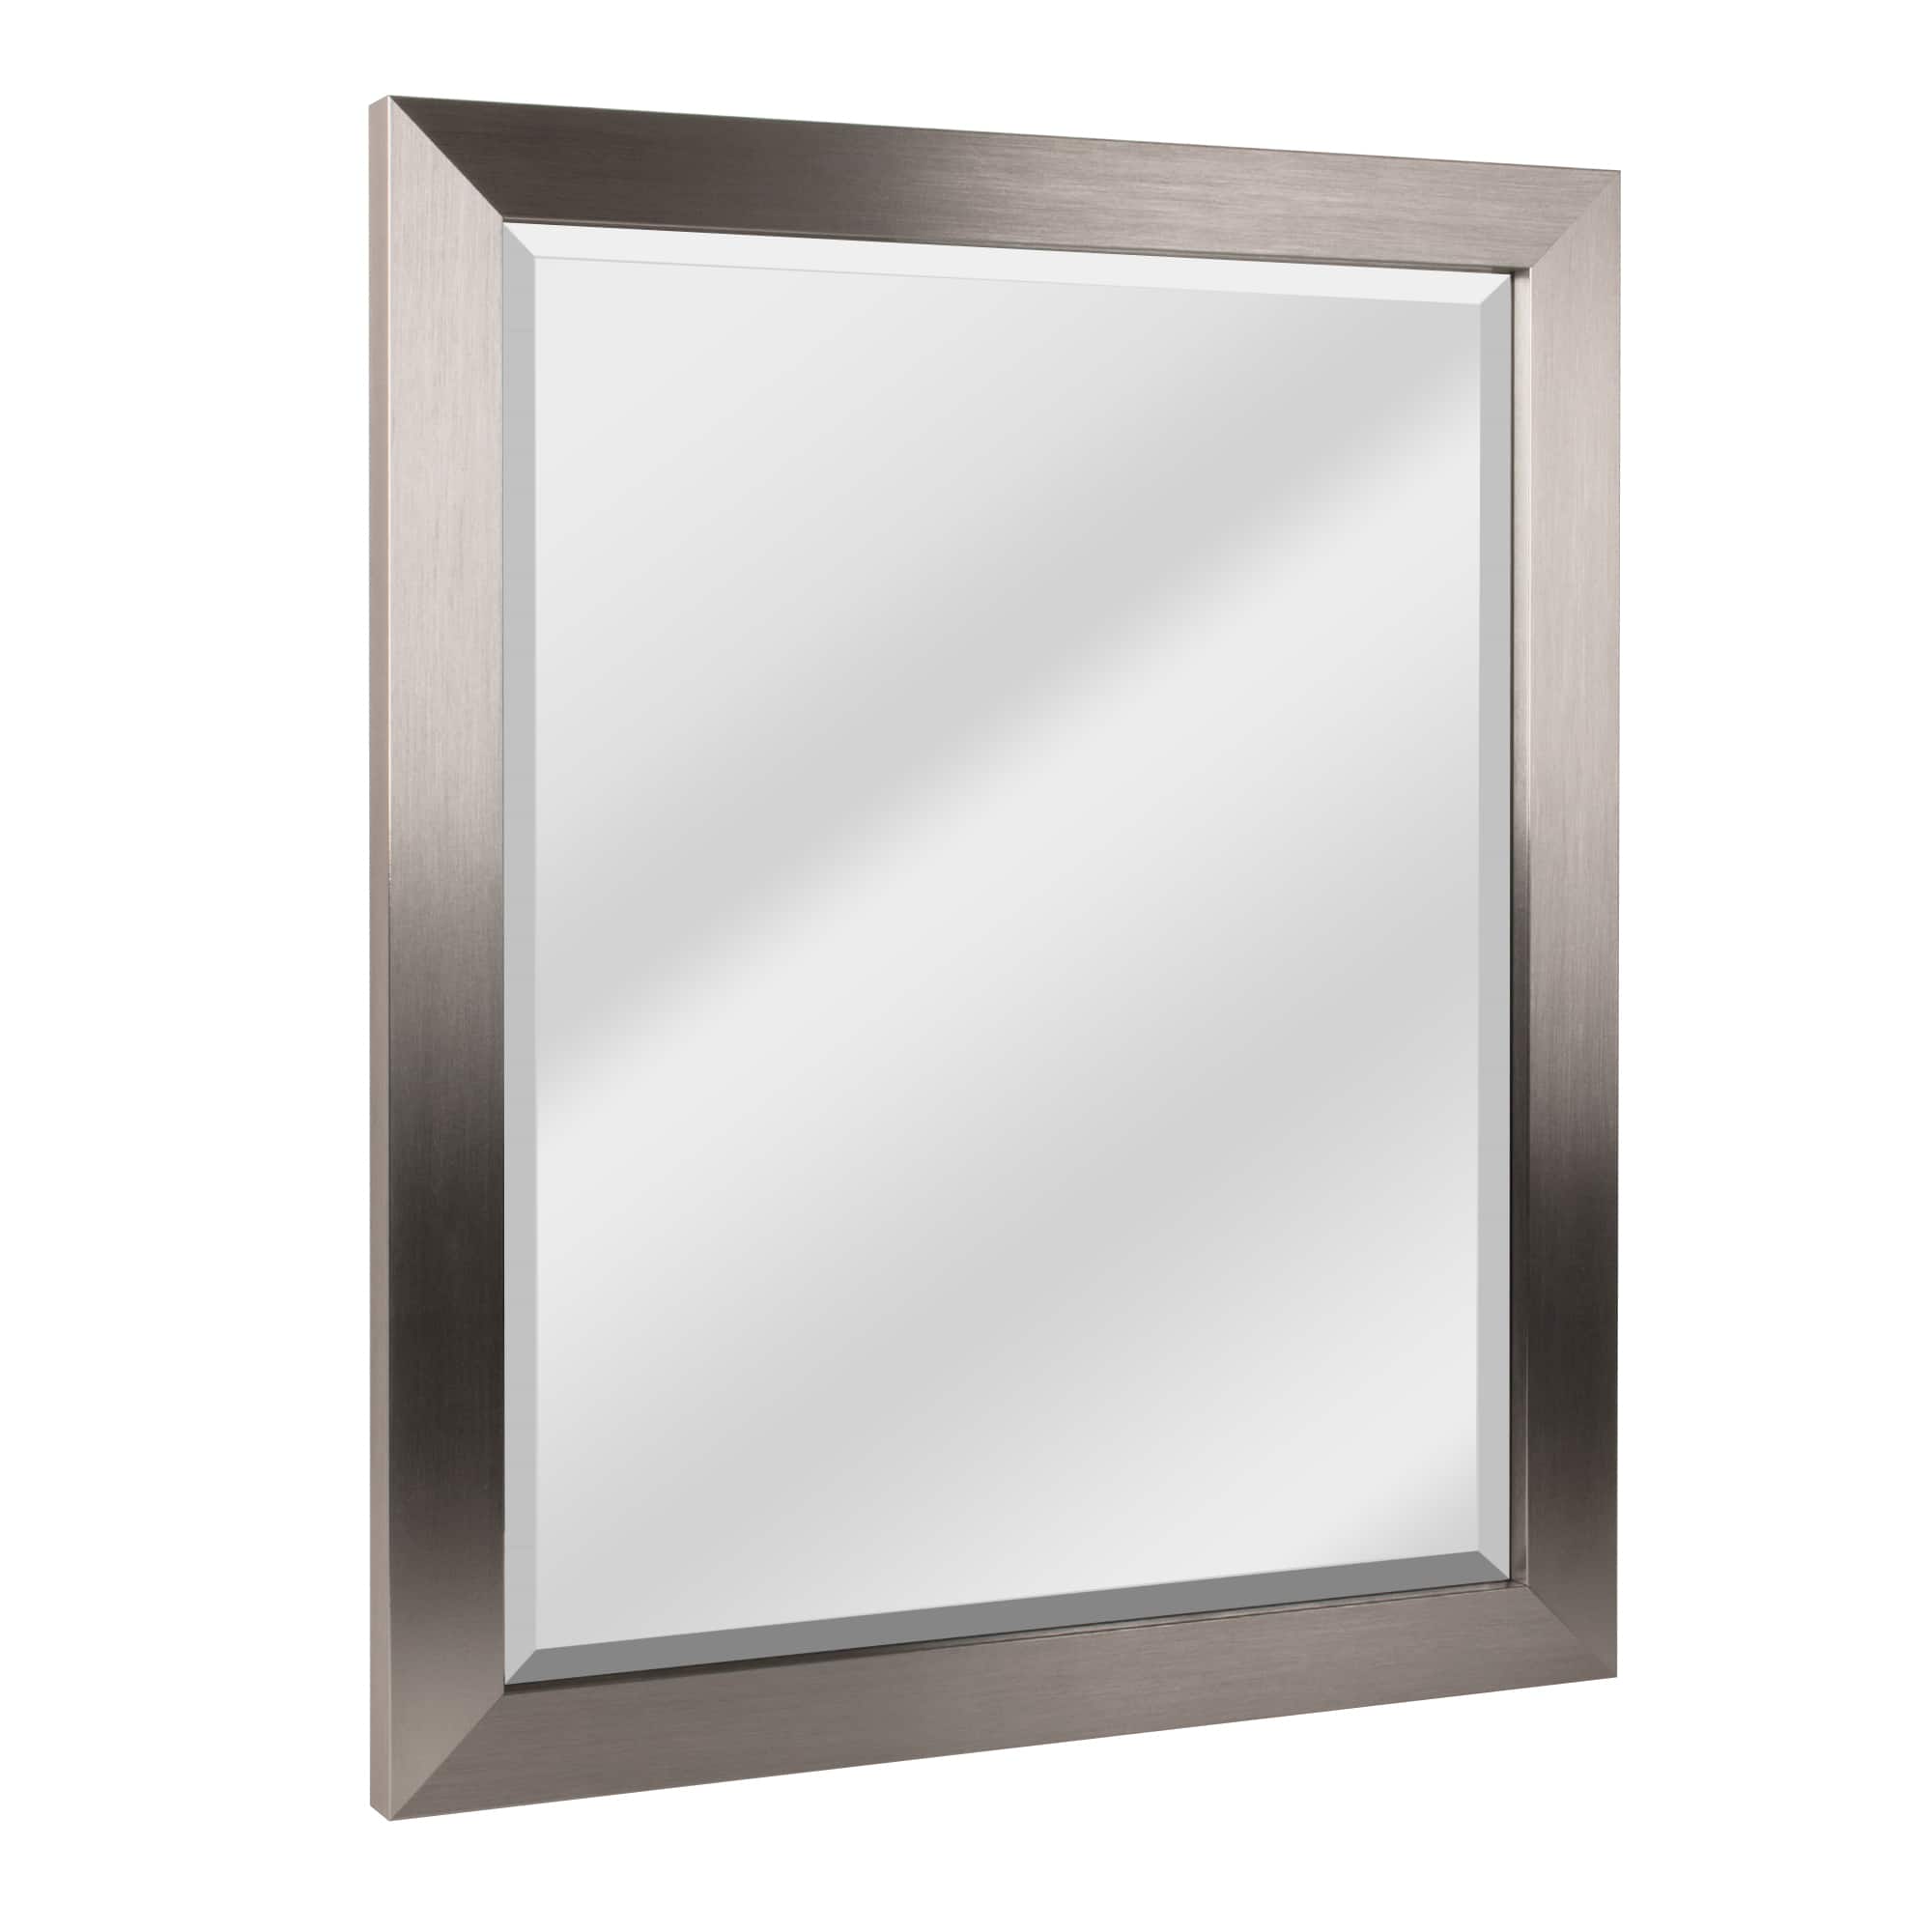 Head West Brushed Nickel Framed Accent Vanity Mirror